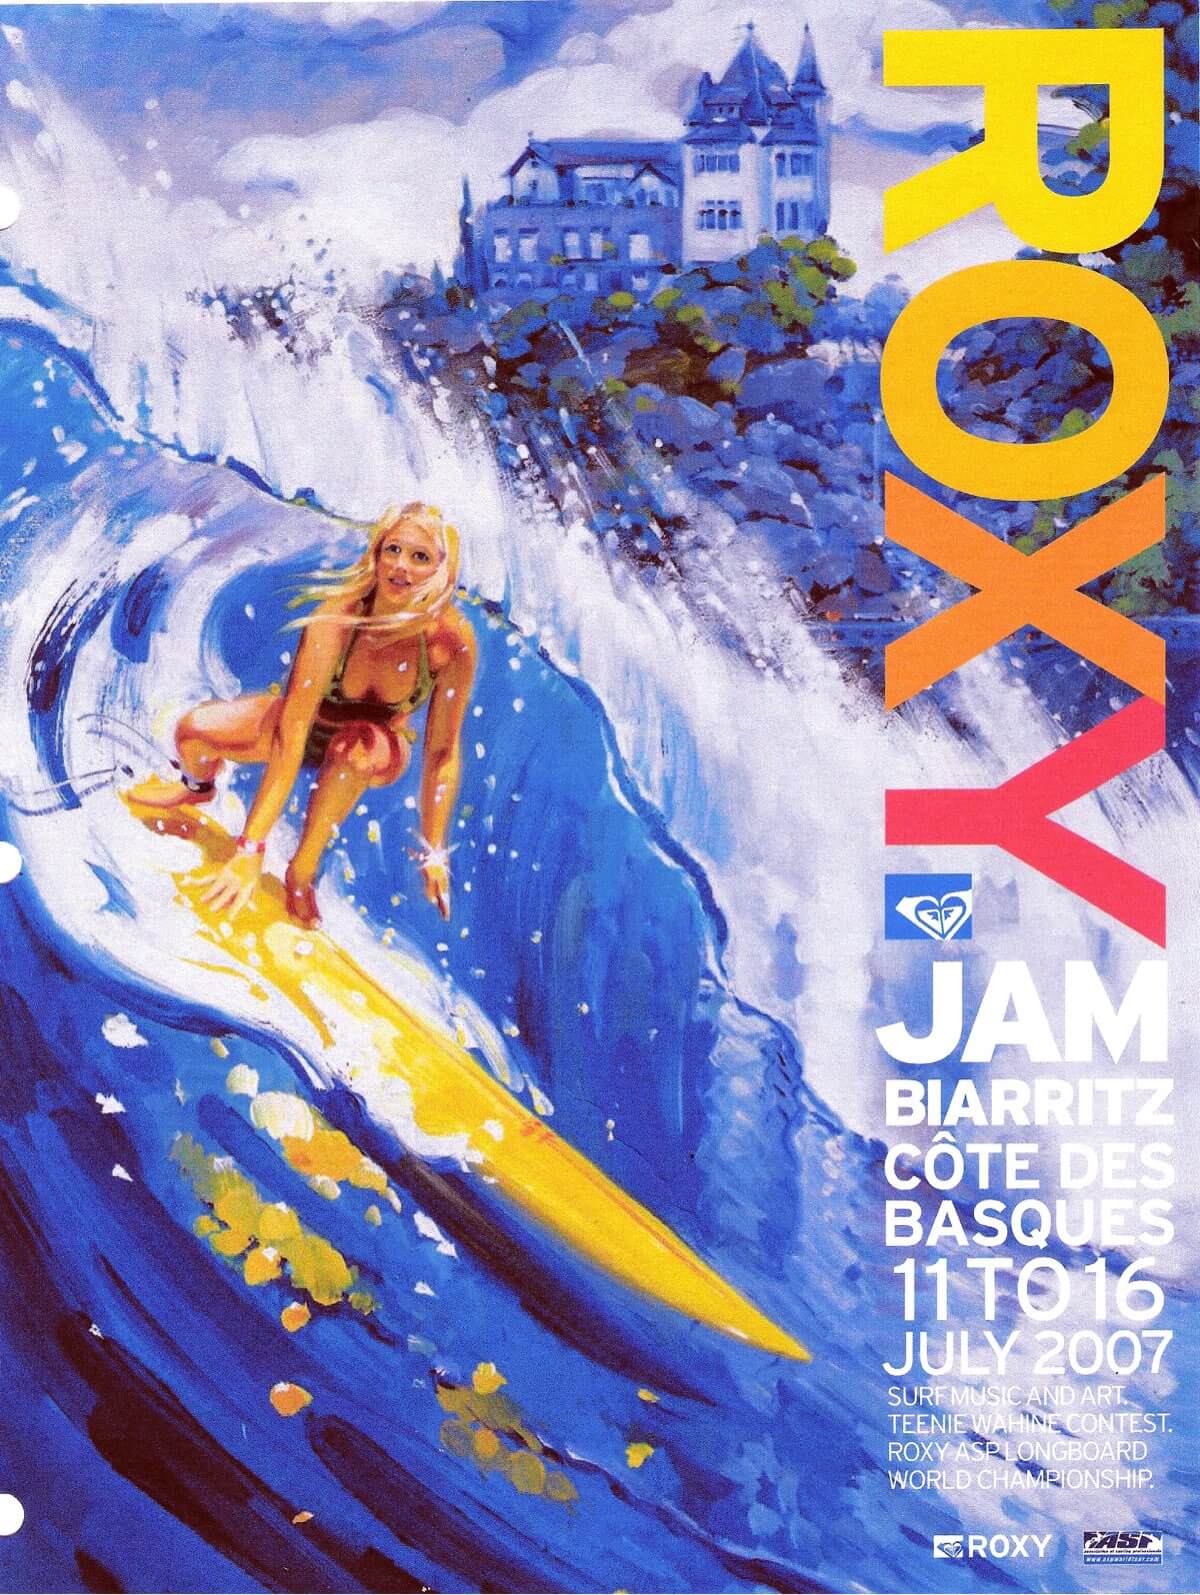 Roxy Jam Biarritz poster (2007)